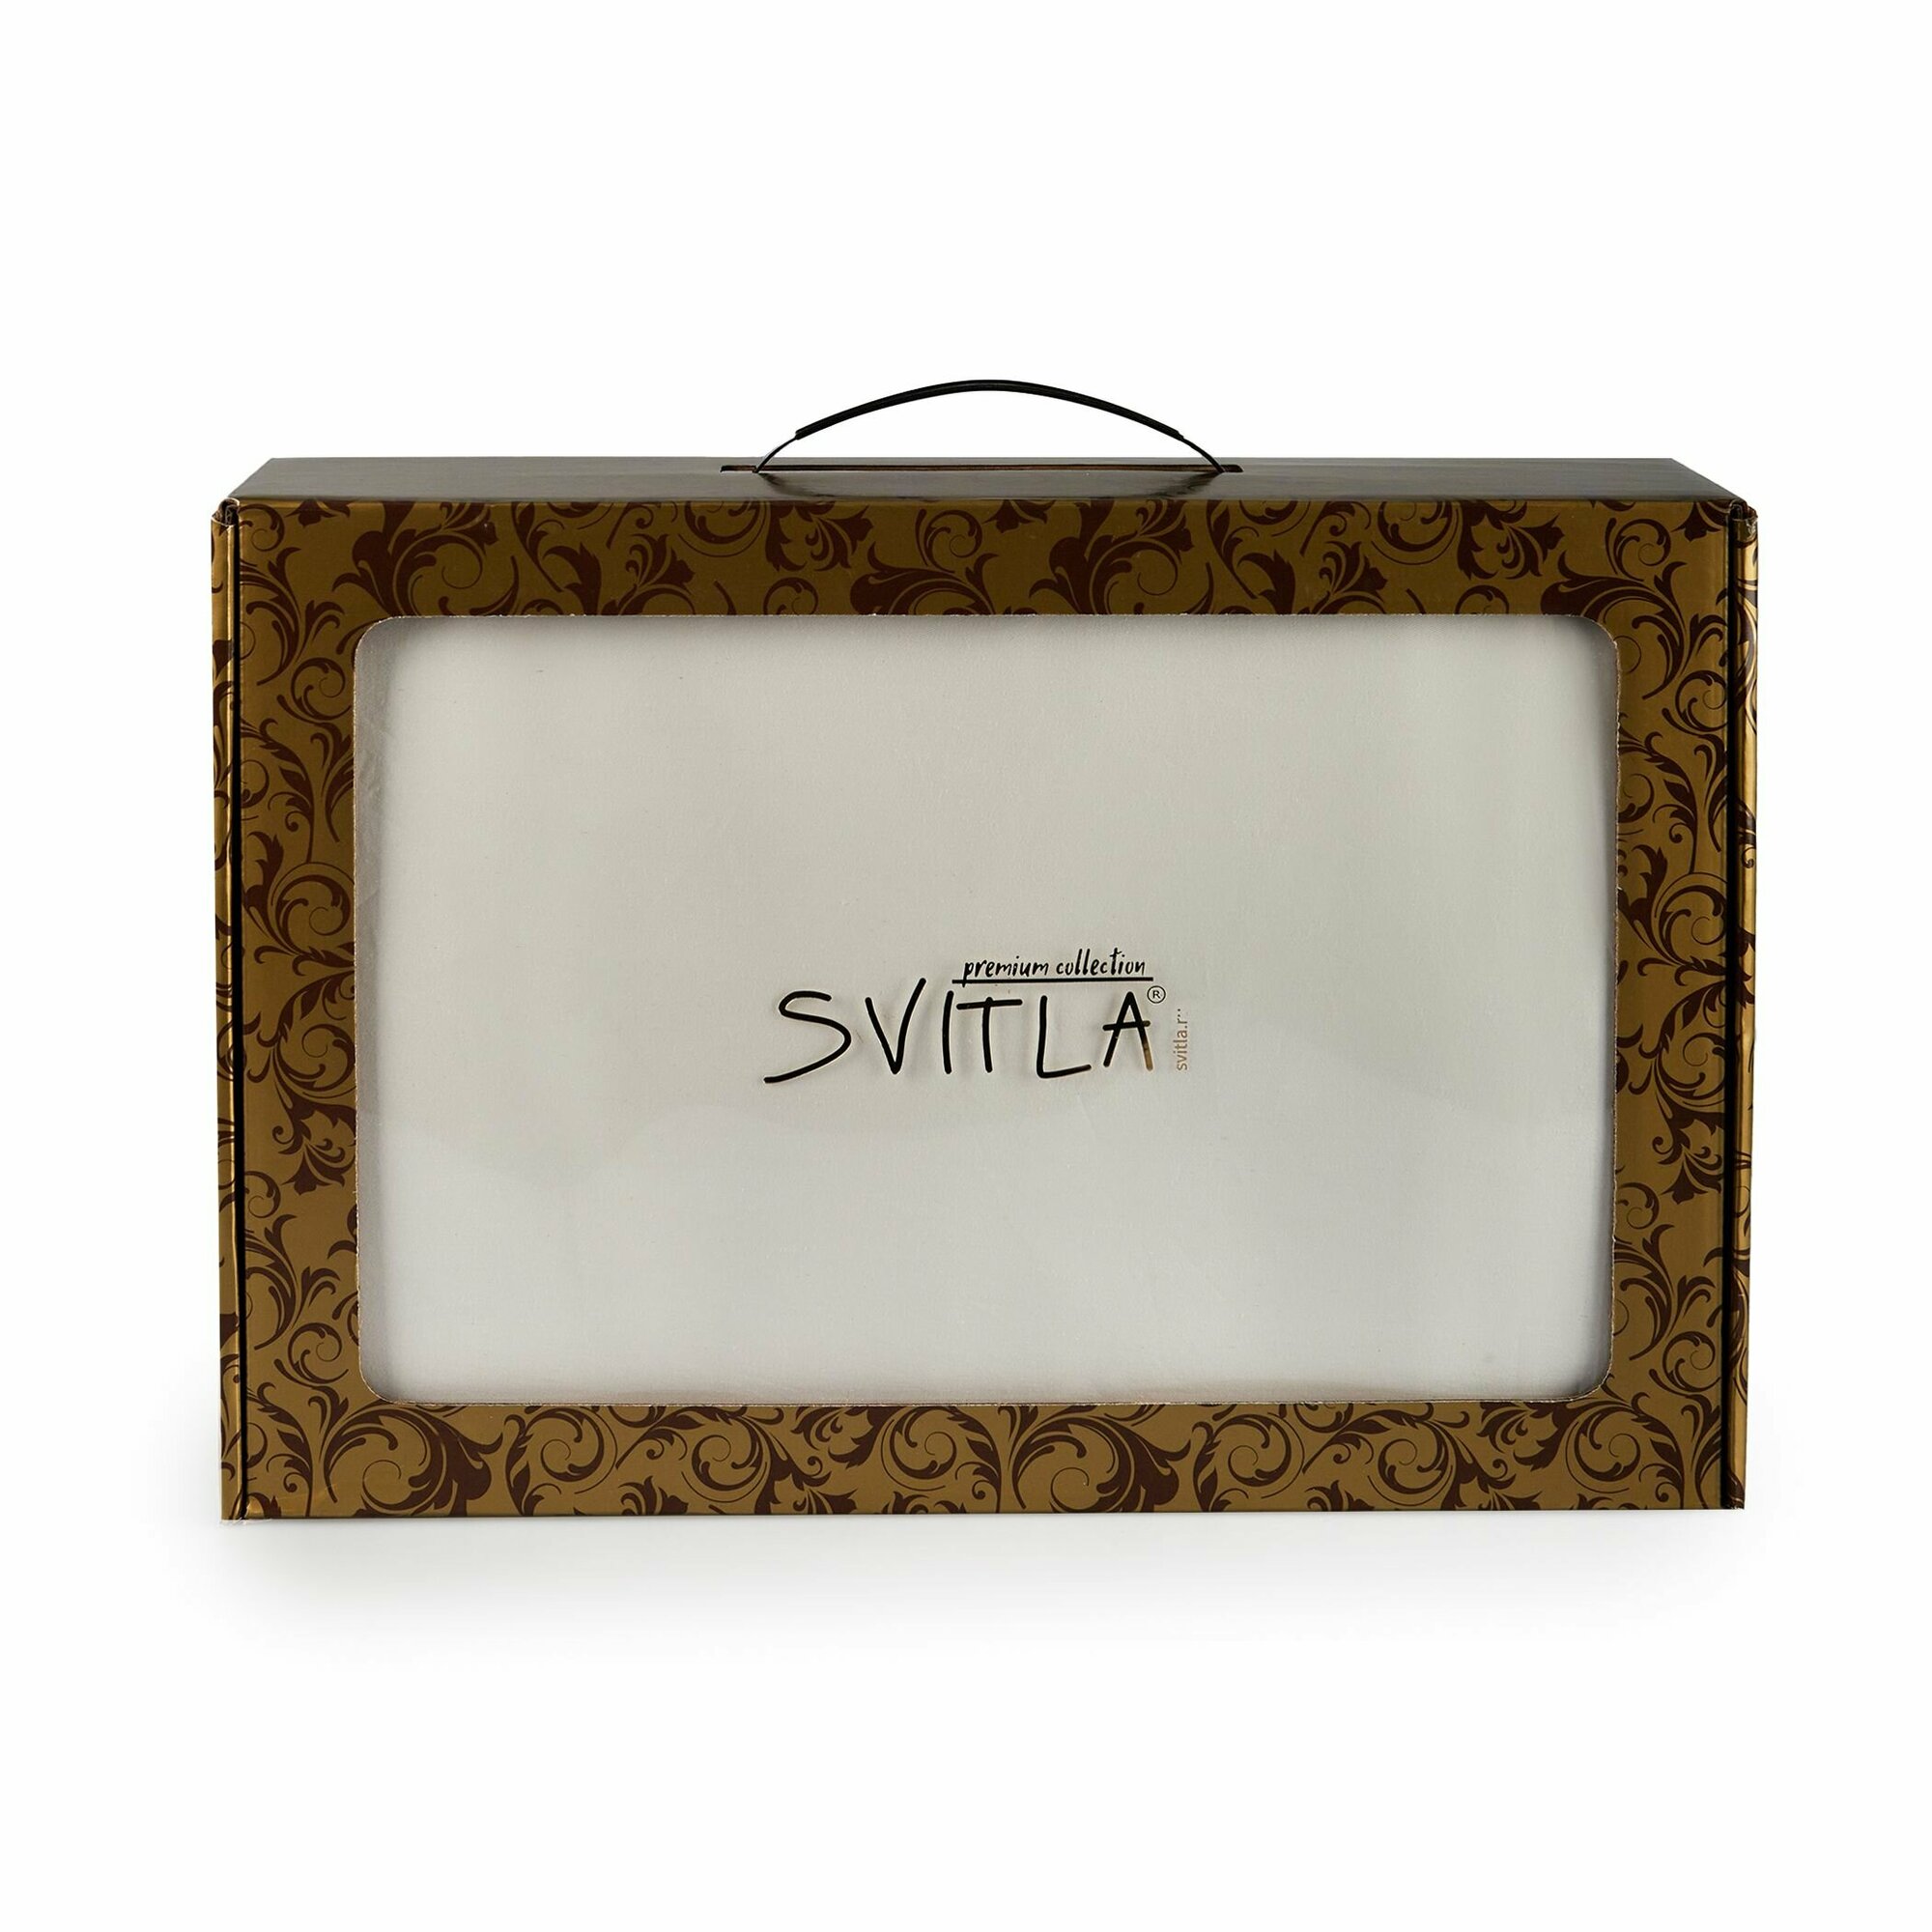 Сатин-люкс КПБ "SVITLA Premium Collection" 2сп/евро, белый